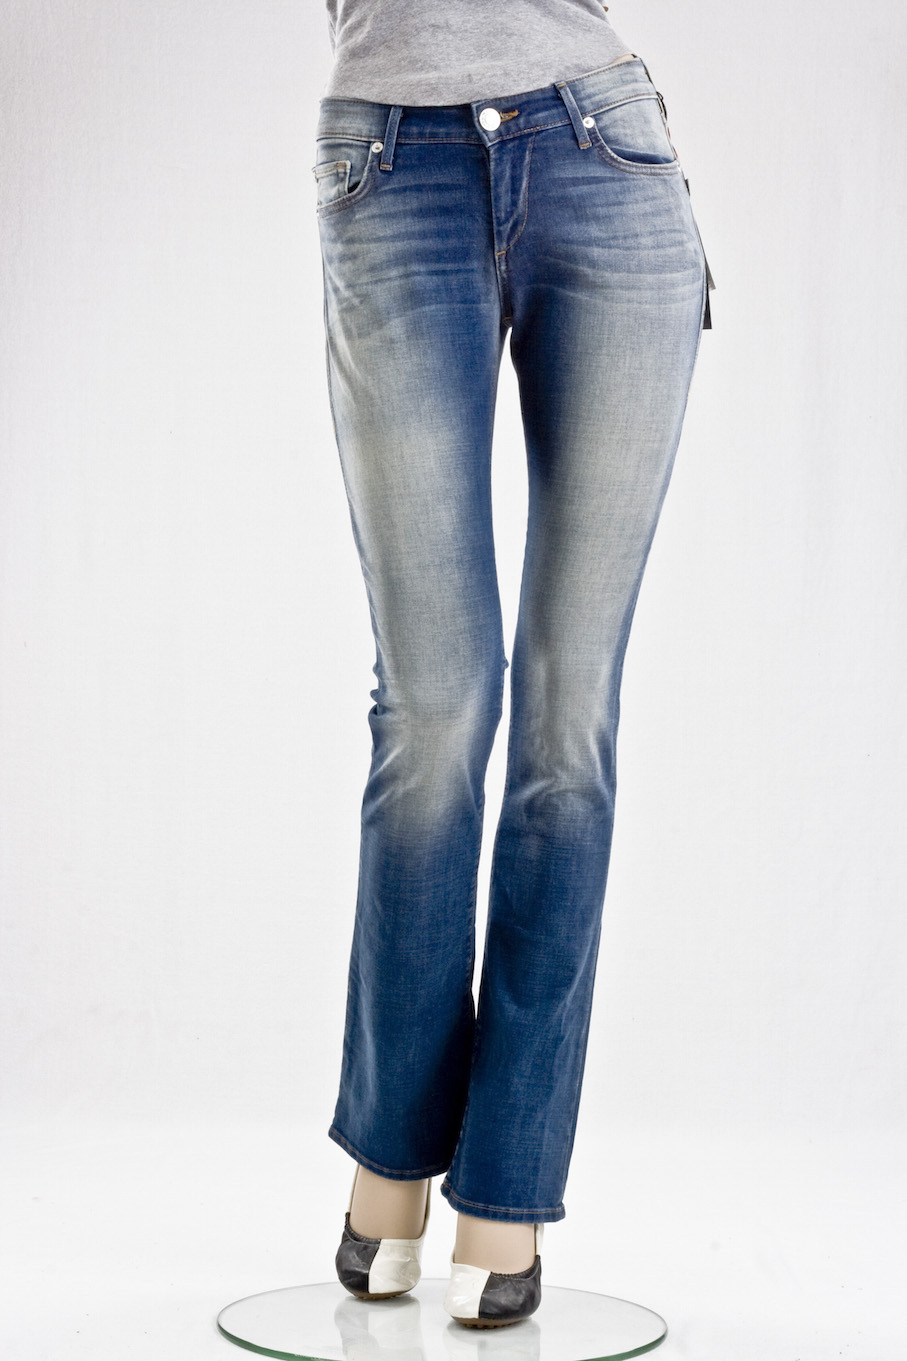 Женские джинсы True Religion "Буткат" Jennie curvy min rise boot интернет-магазин Fashion Jeans